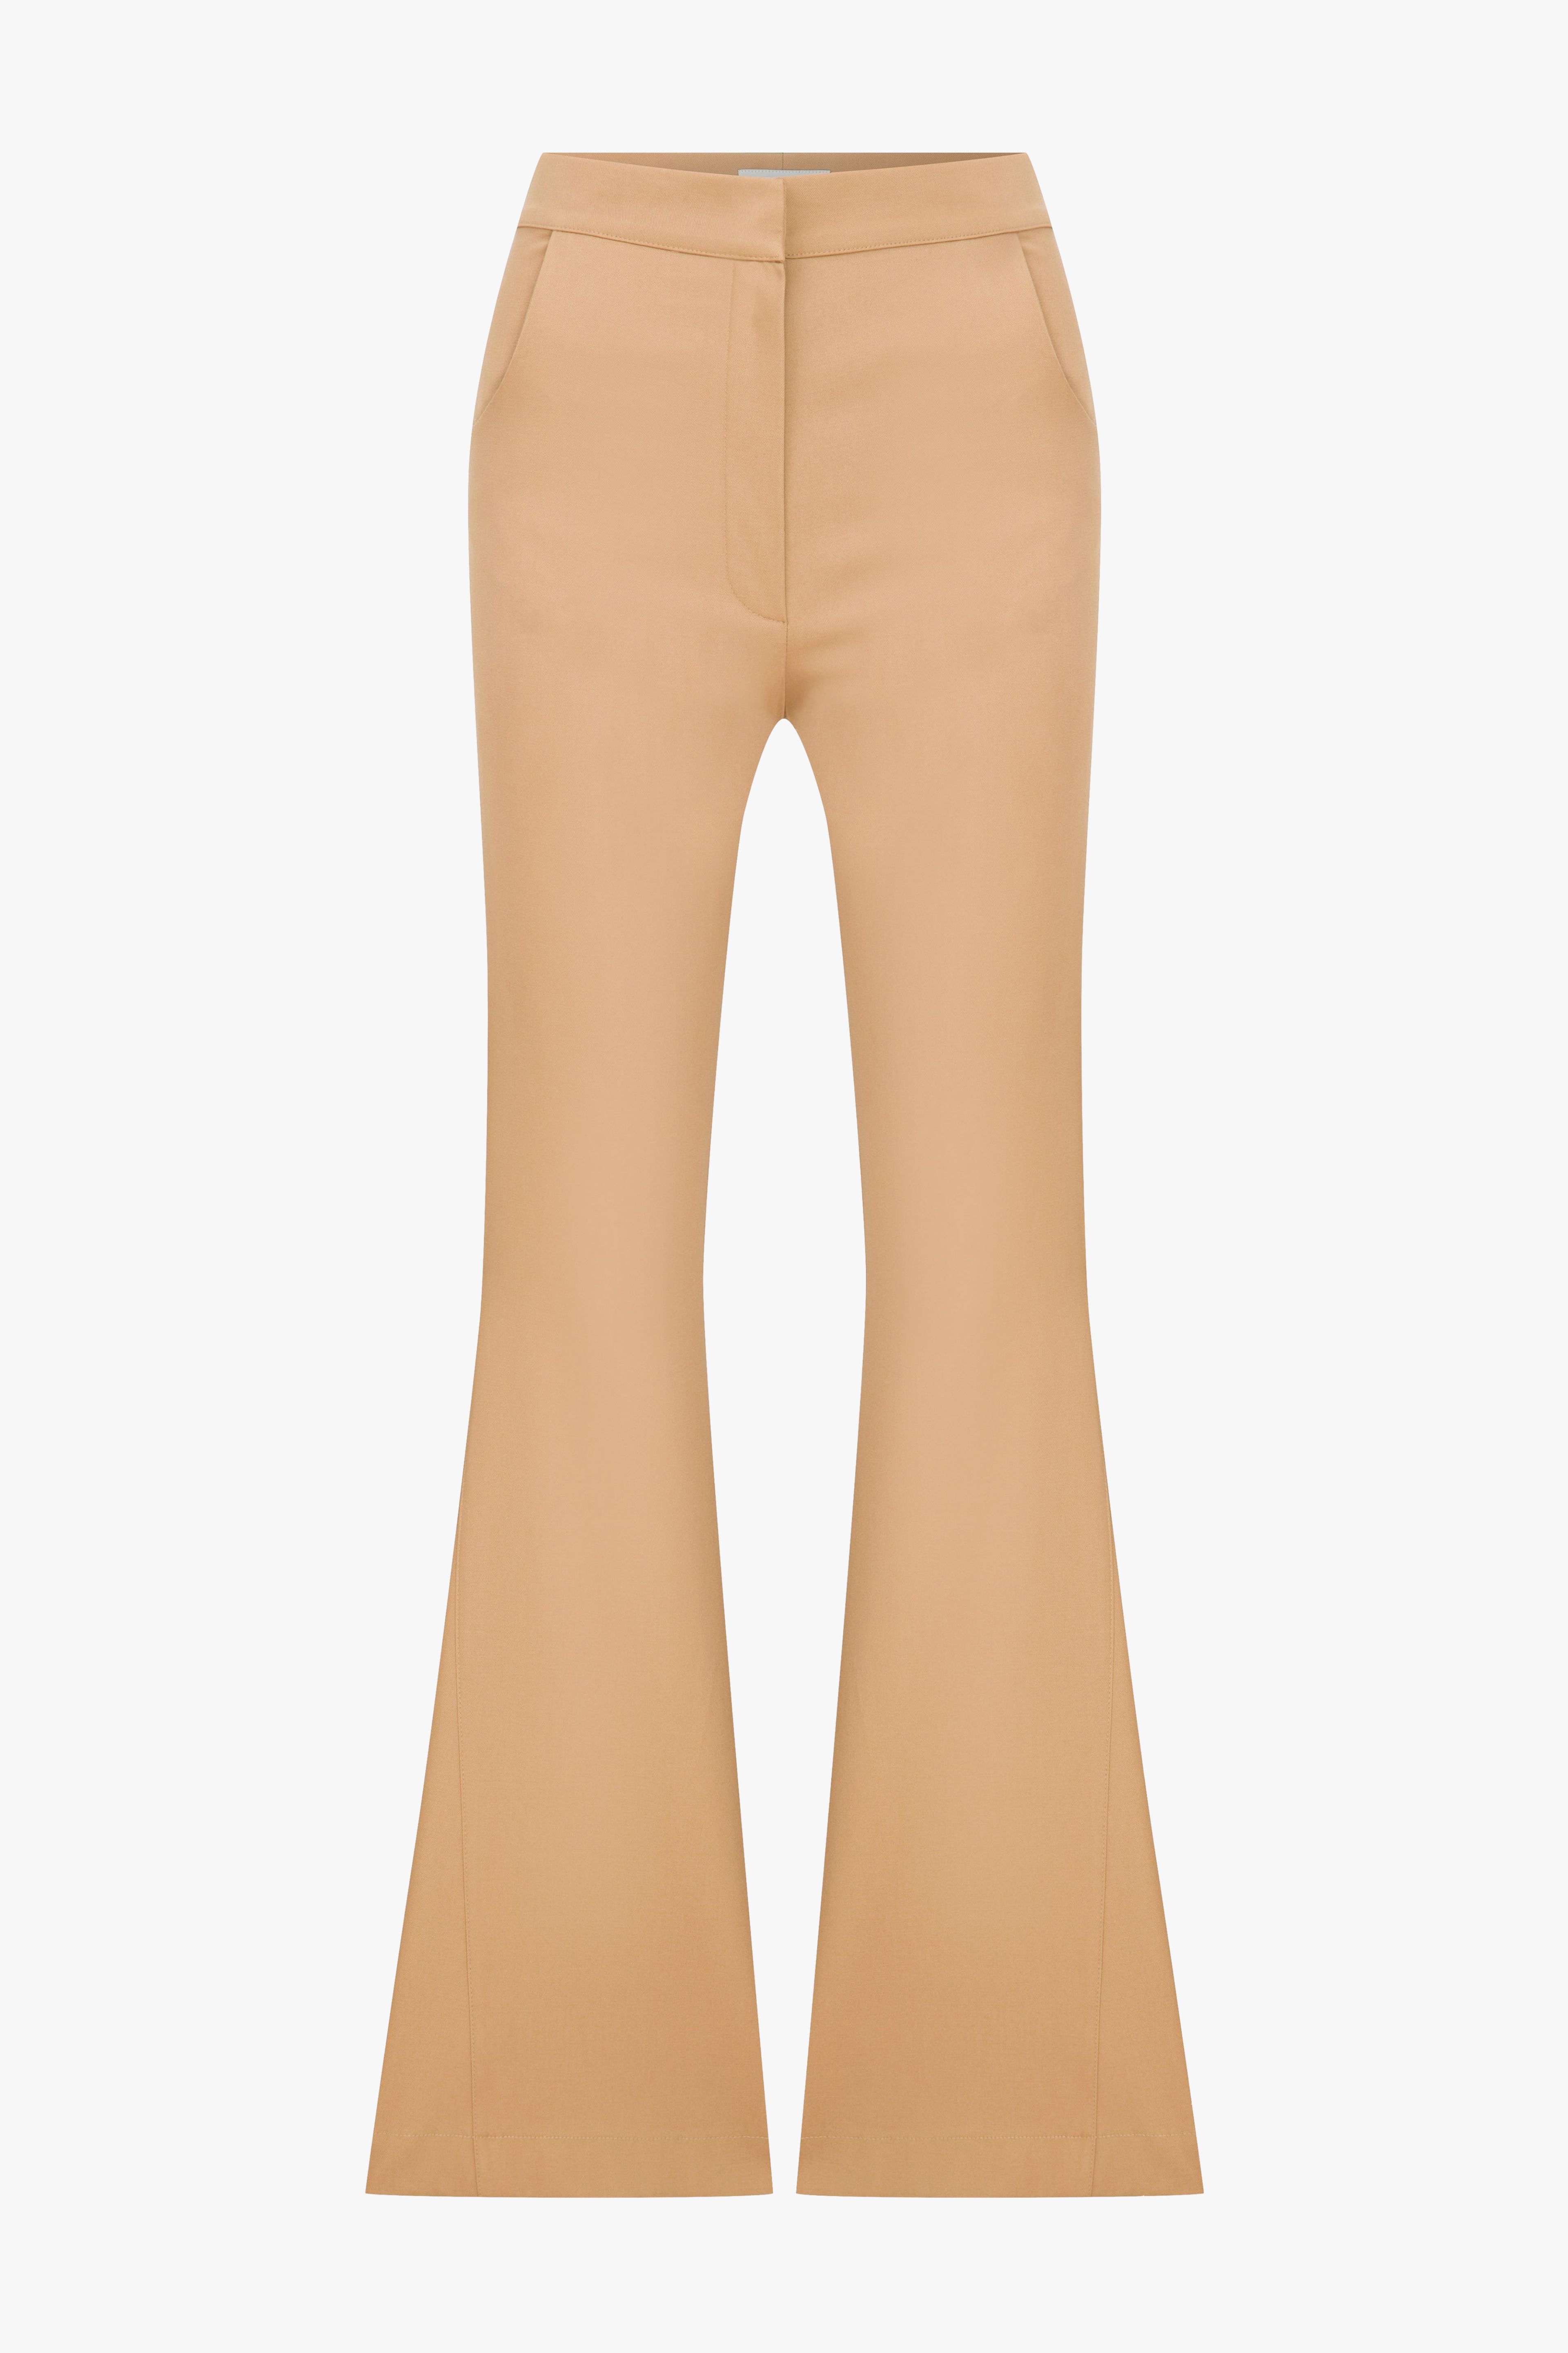 Female Elegant Square Pants Taslan Polyester Fabric Wide Leg Pants with  Belt by Enchante Clothing Co.